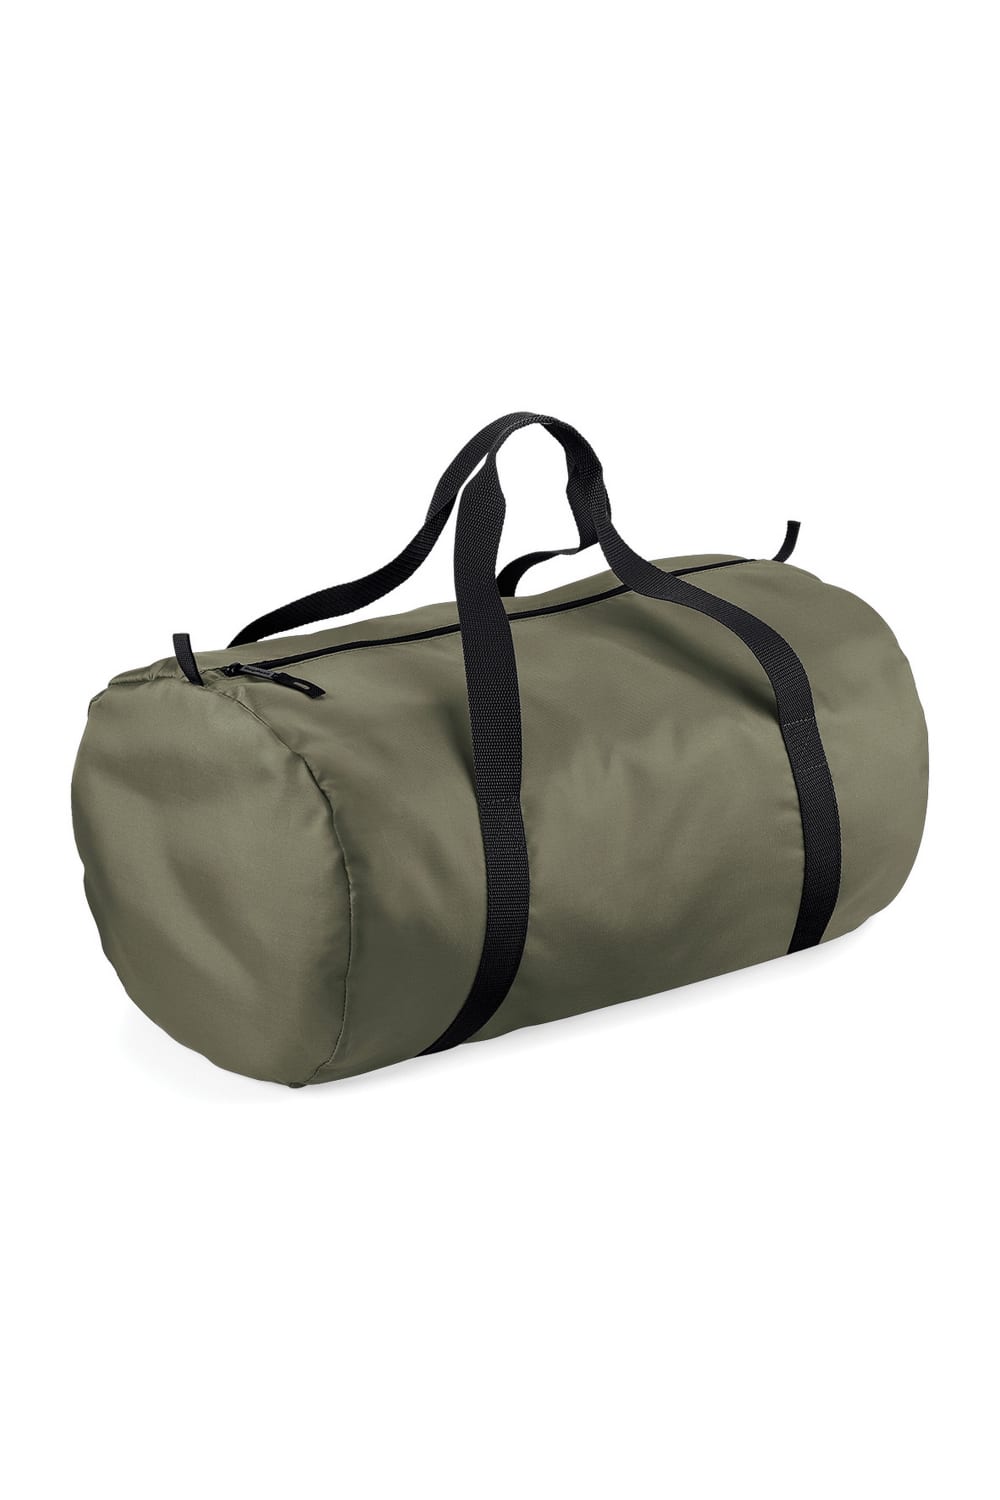 Packaway Barrel Bag/Duffel Water Resistant Travel Bag, 8 Gallons - Olive Green/Black